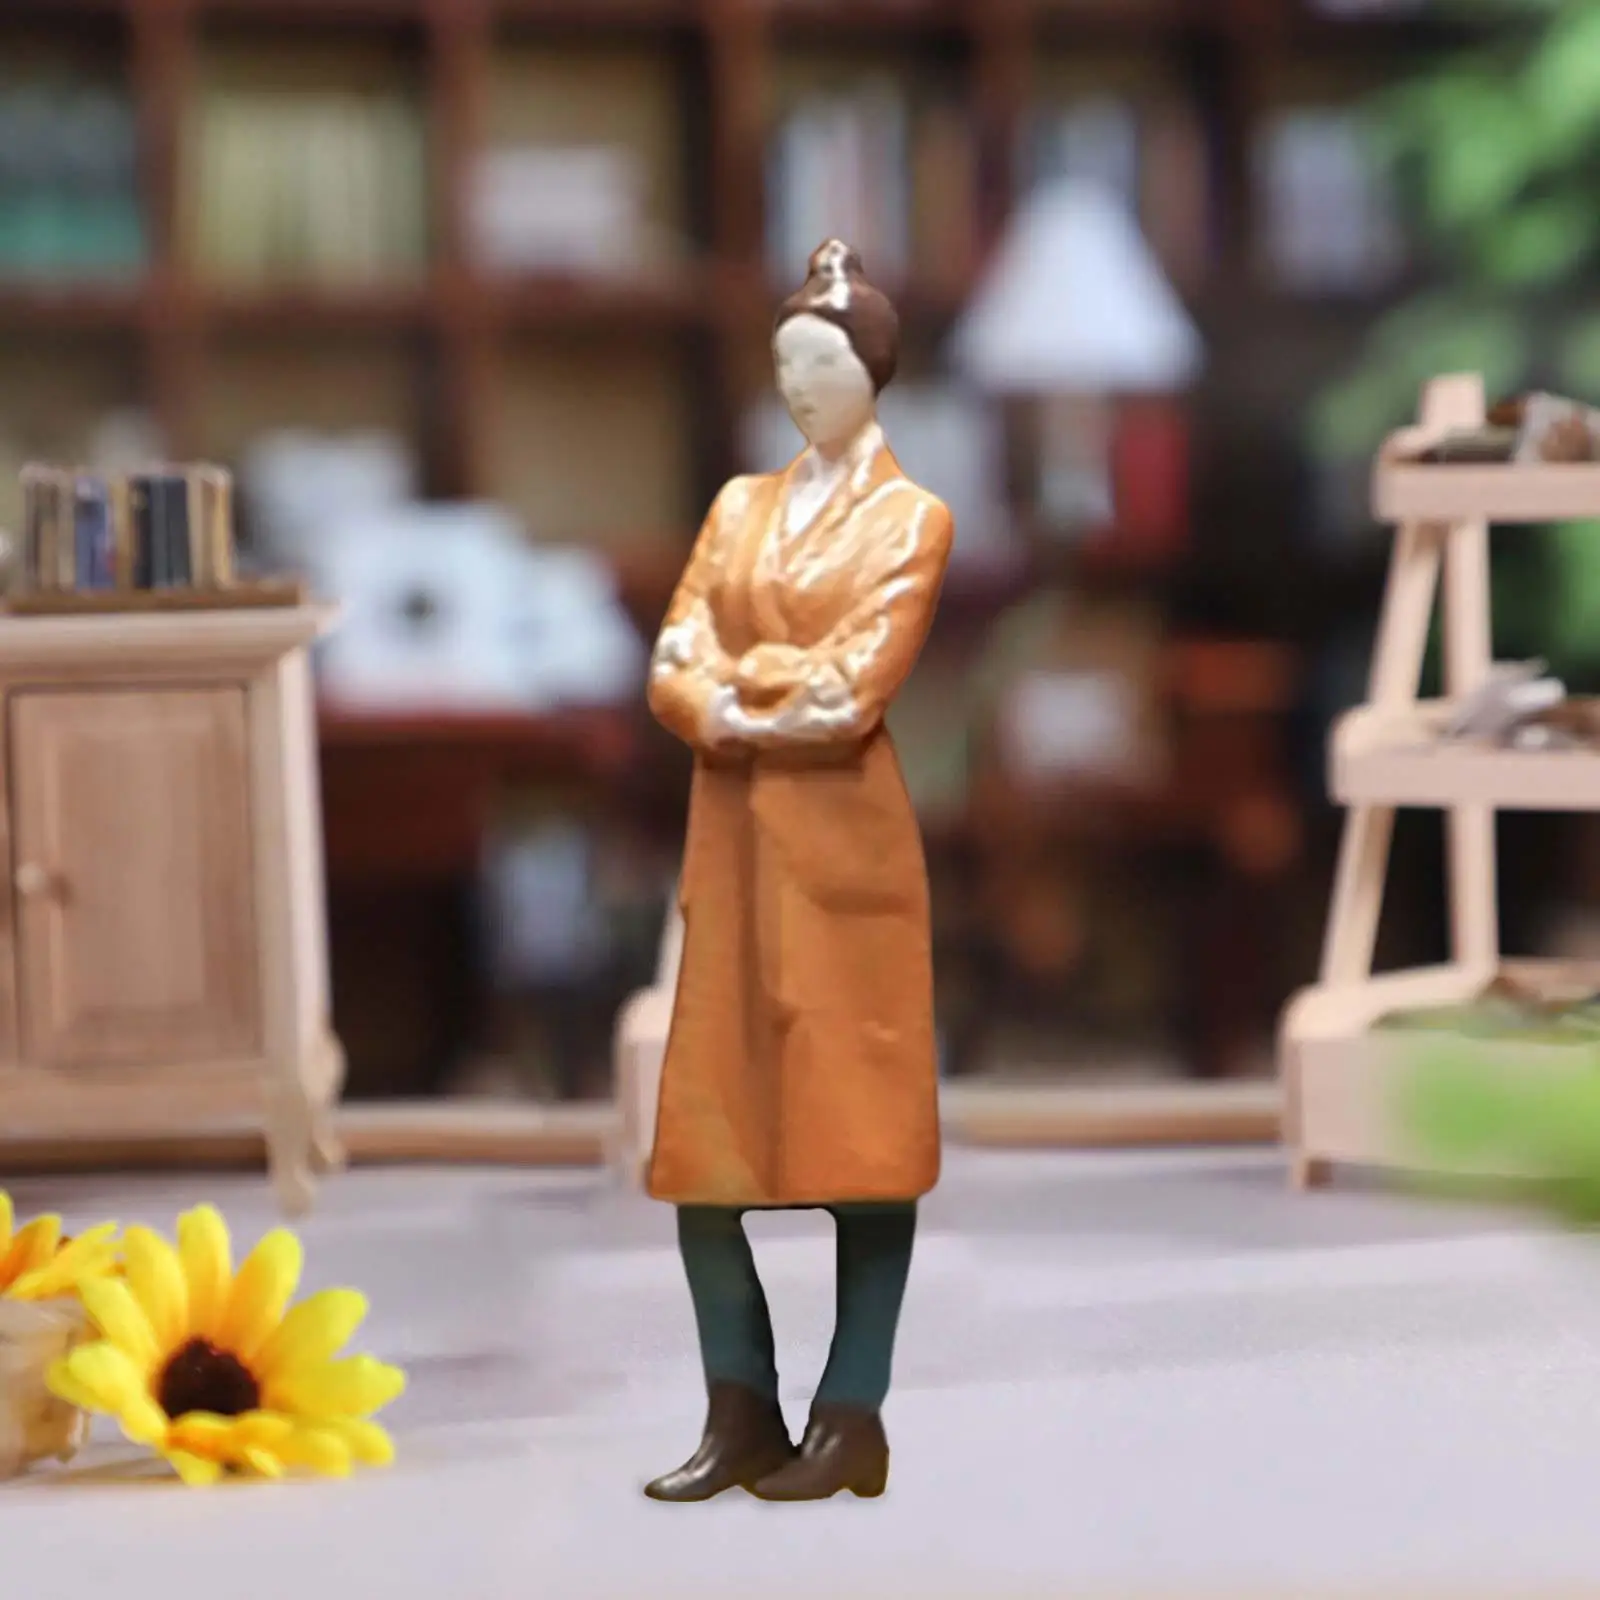 1/64 Girl Figure Figurine Miniature Scenes for Micro Landscape DIY Projects Layout